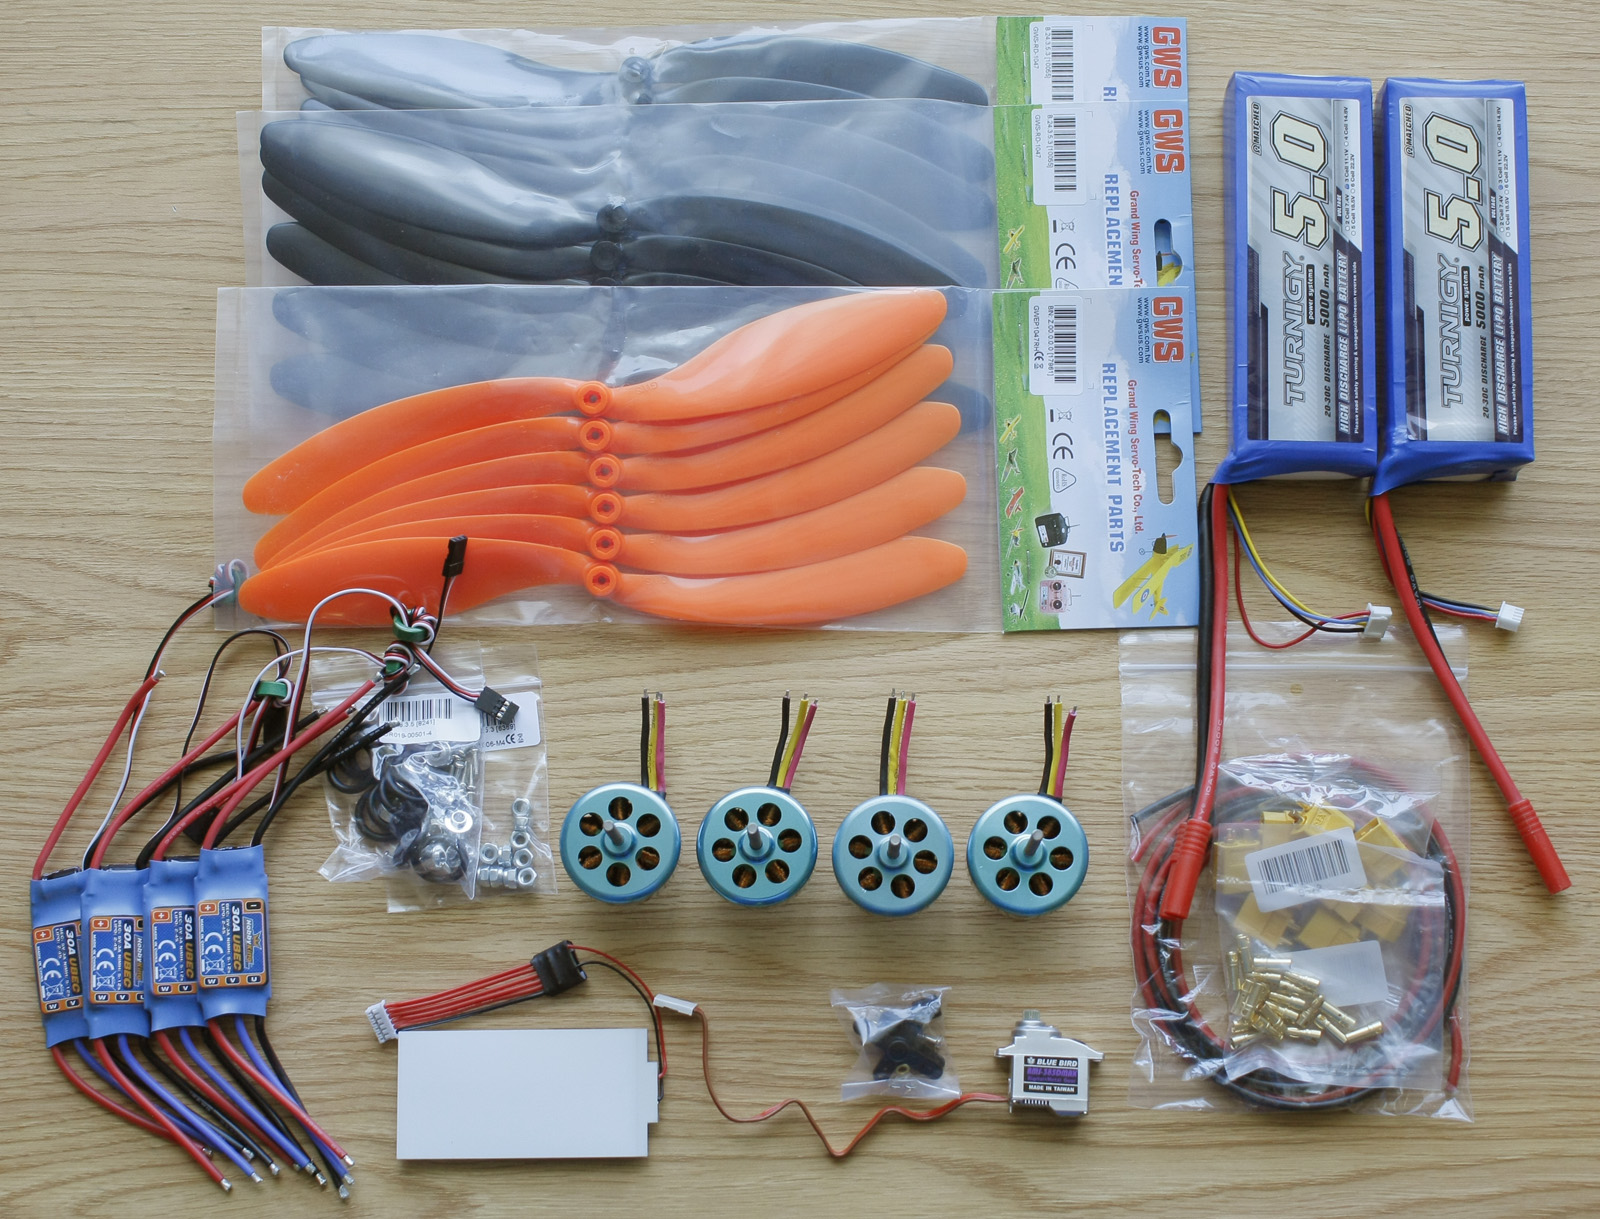 Main HobbyKing order containing batteries, motors, ESCs, servo, props, and accessories